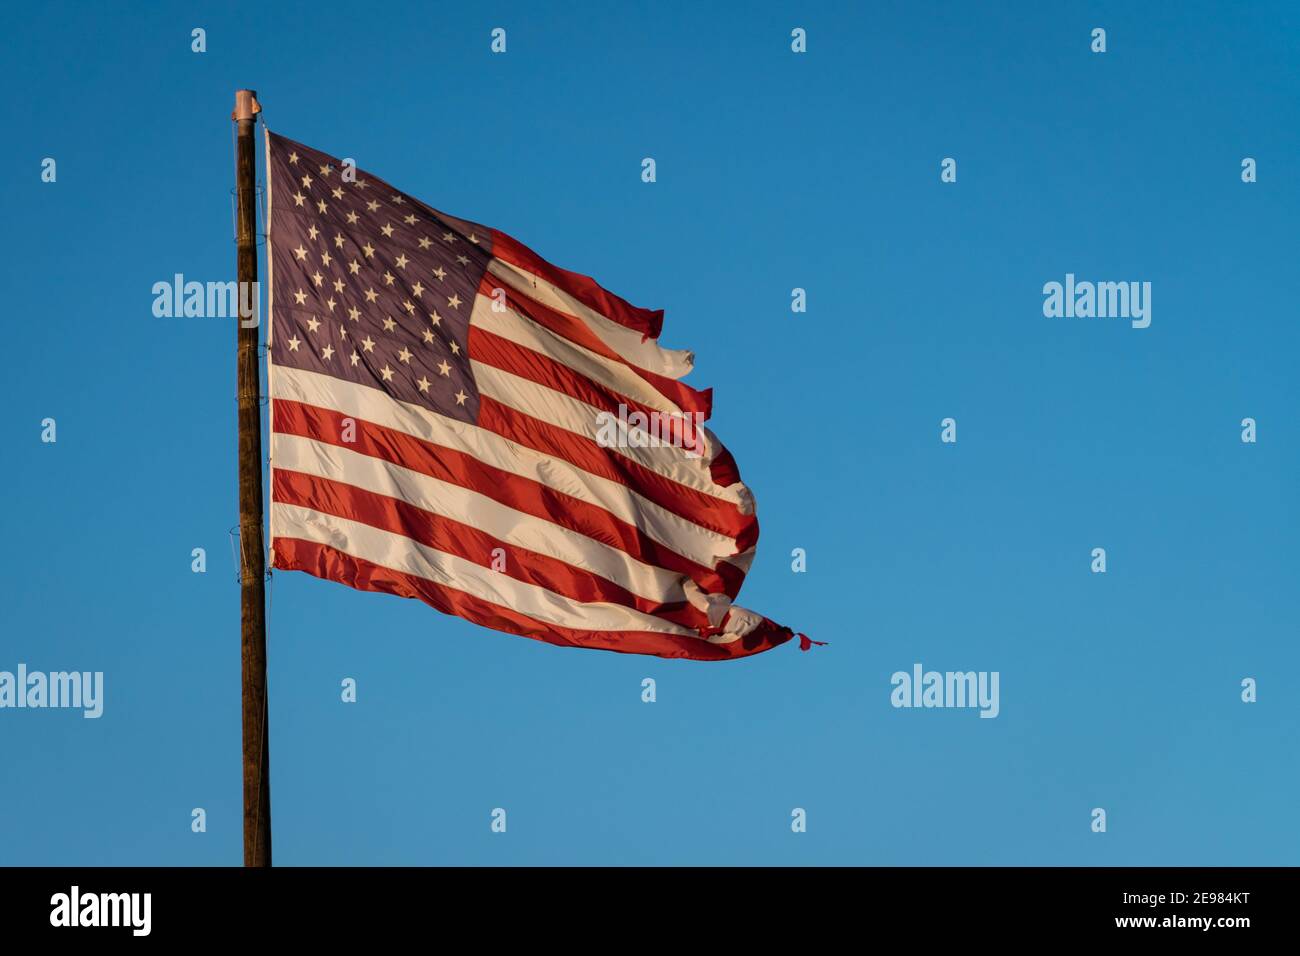 Drapeau américain flatté contre un ciel bleu brillant Banque D'Images